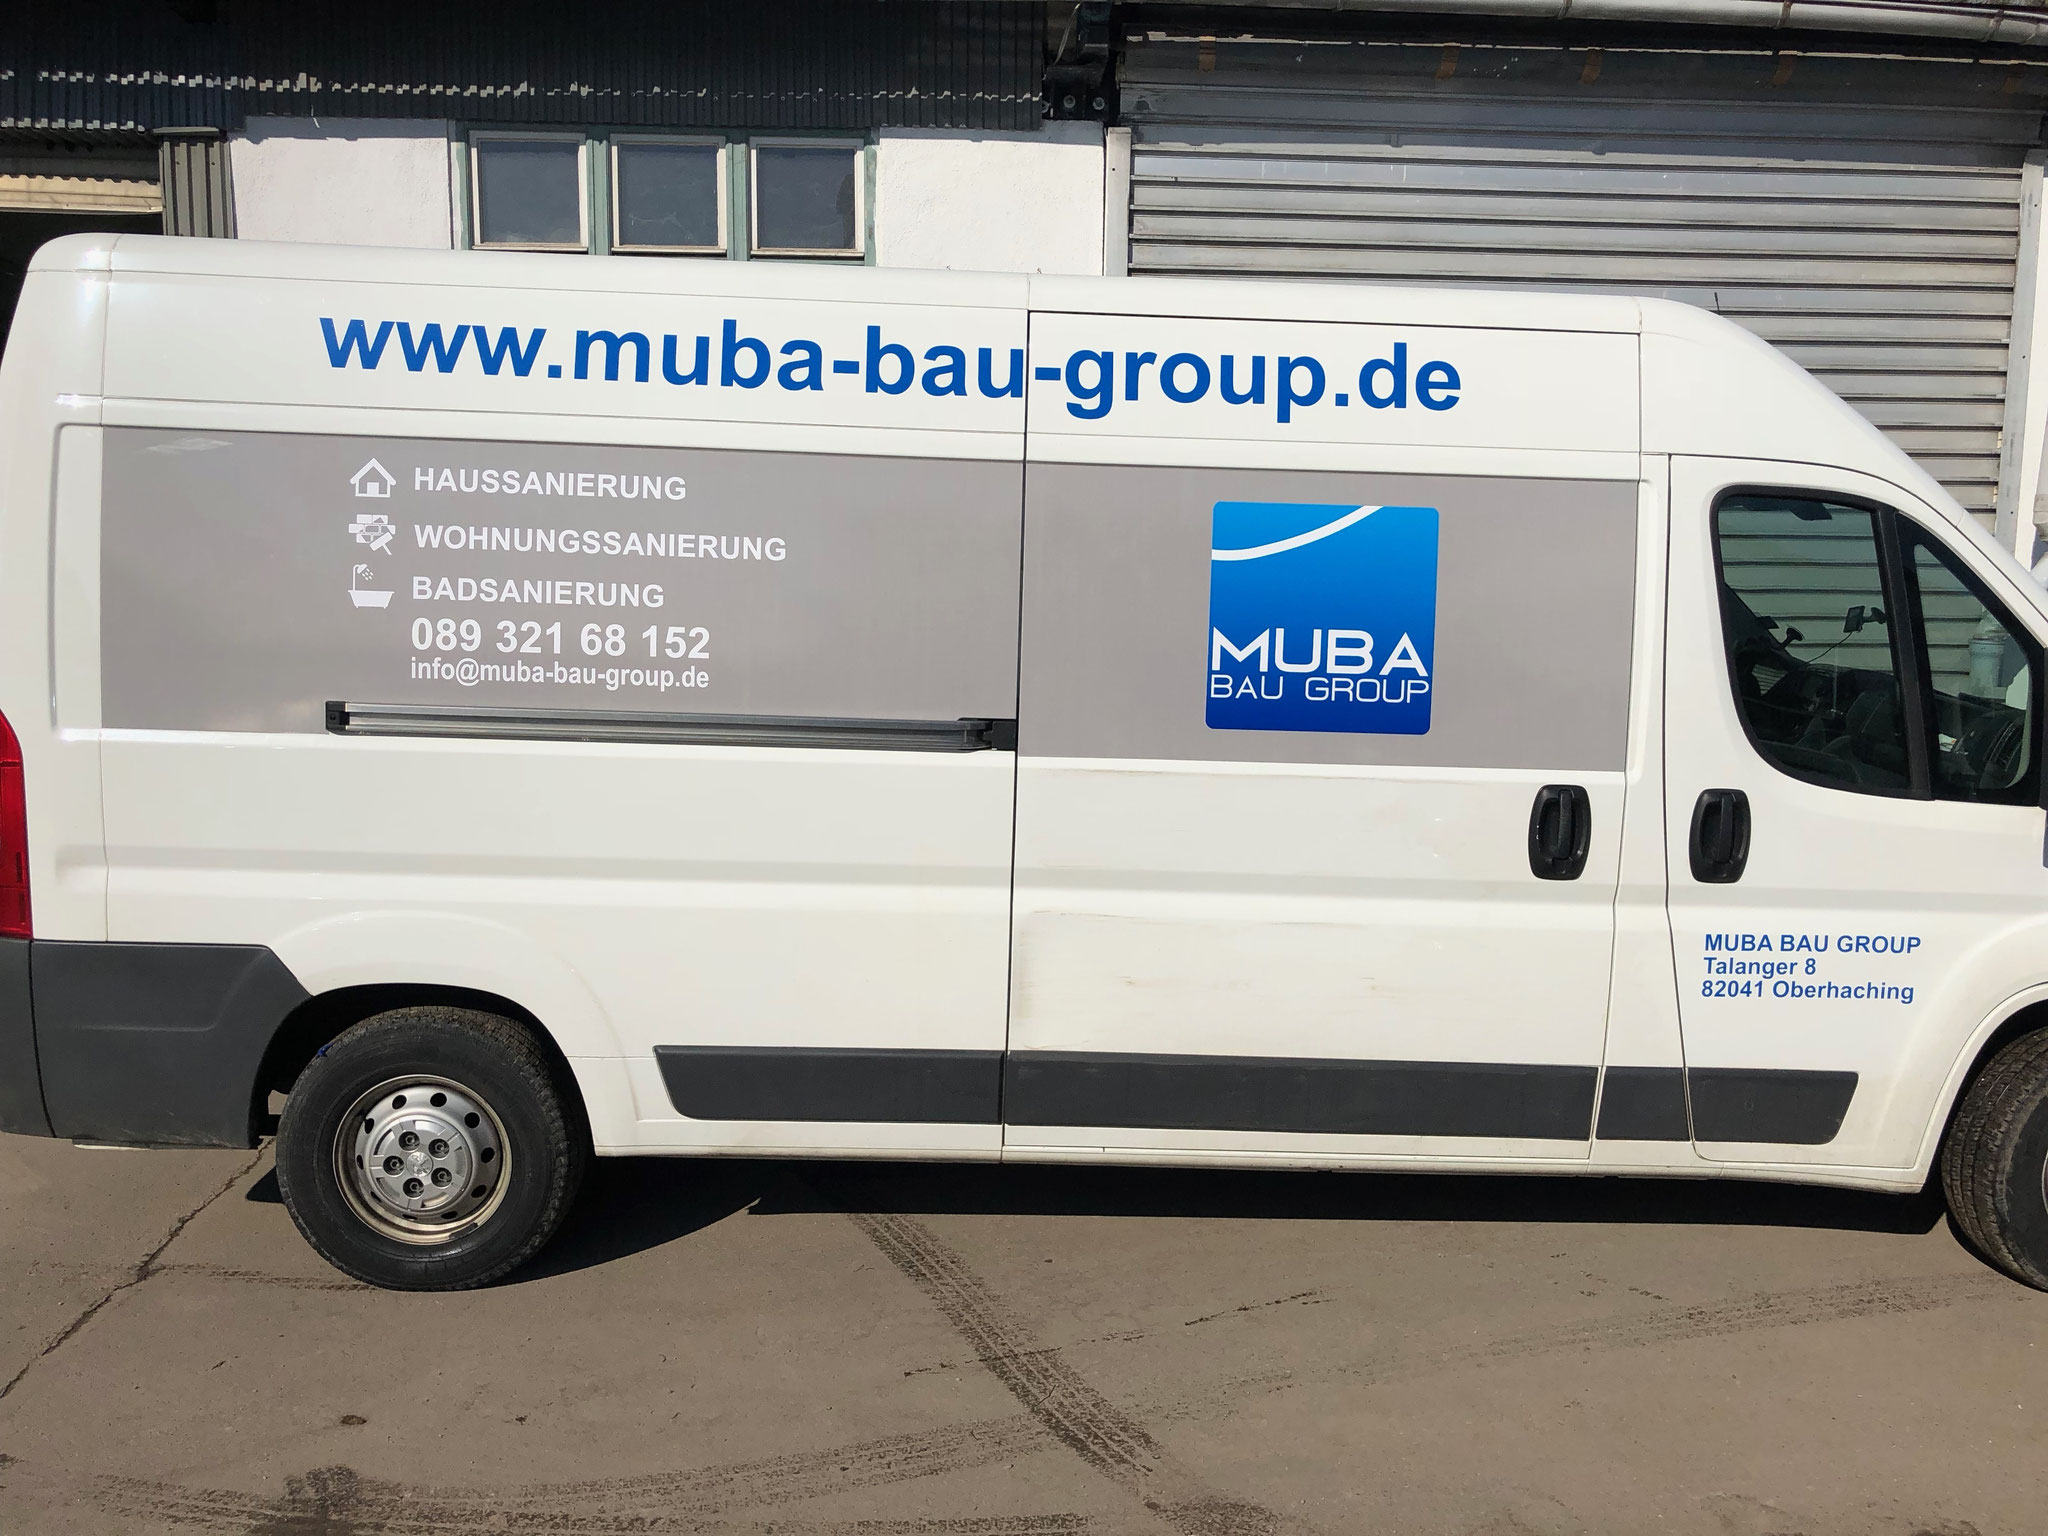 Muba Bau Gmbh Autobeschriftung in München